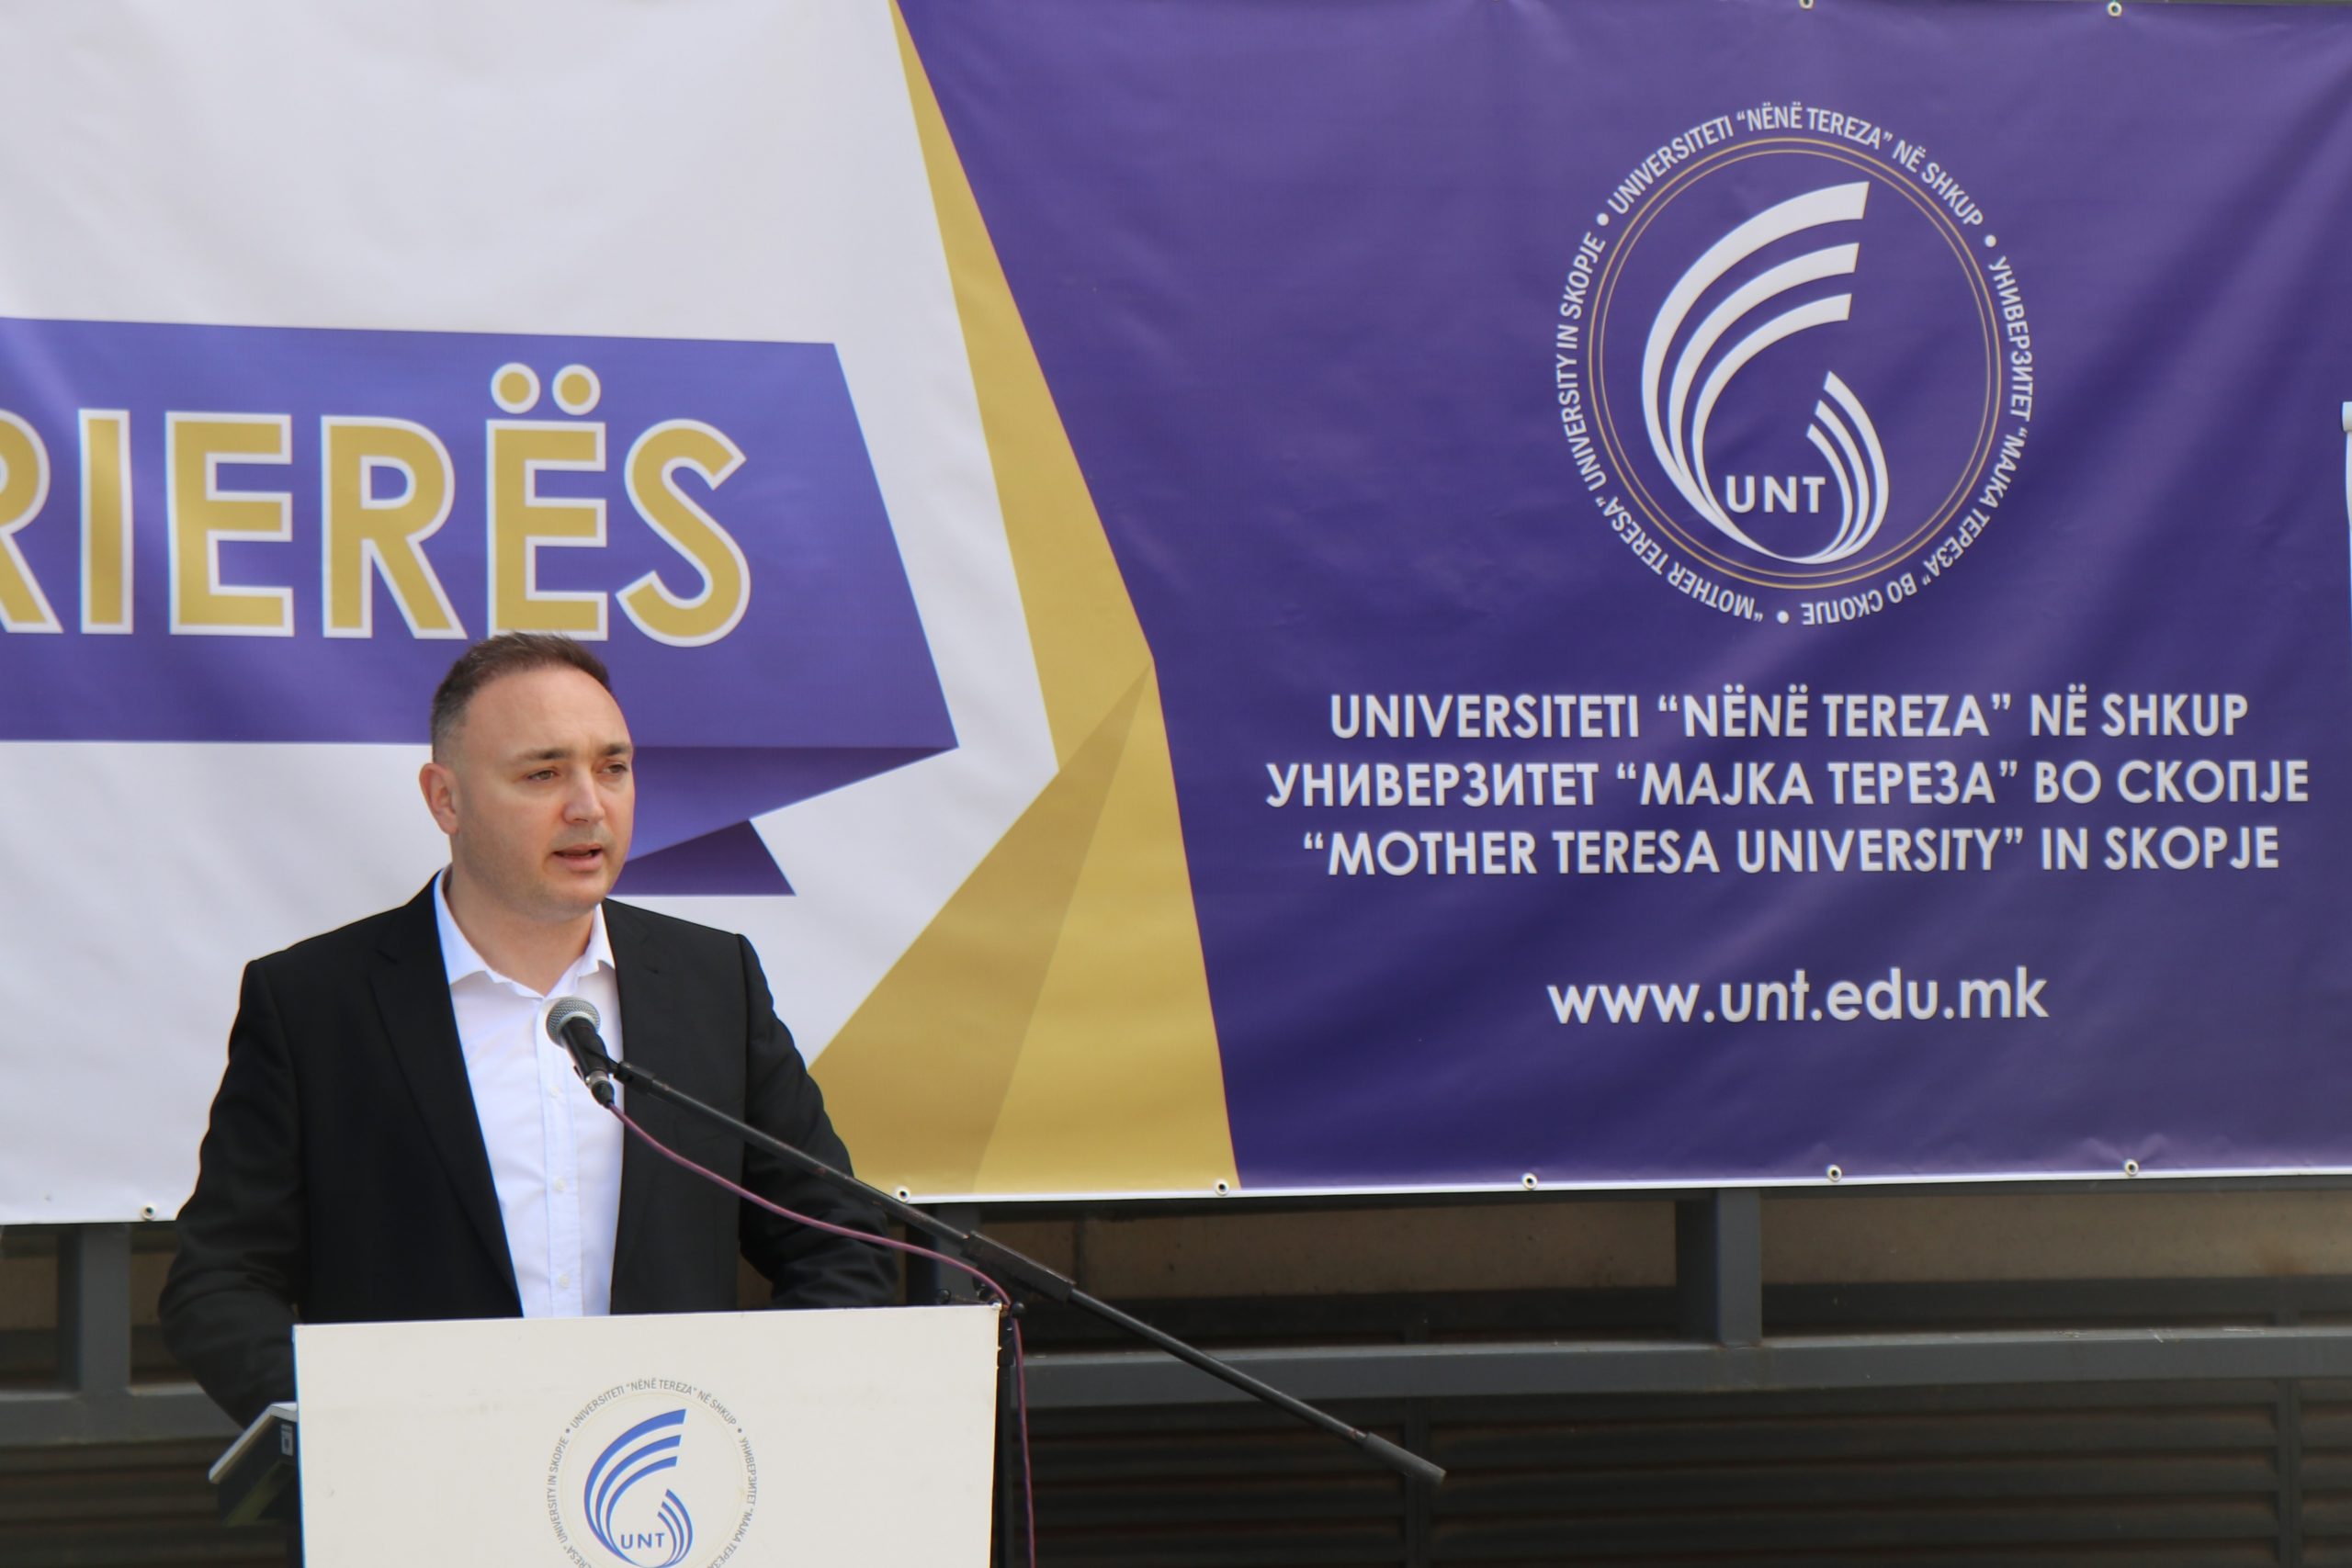 DFITD Festim Halili addressed the Career Days 2022 organized by Mother Teresa University from Skopje